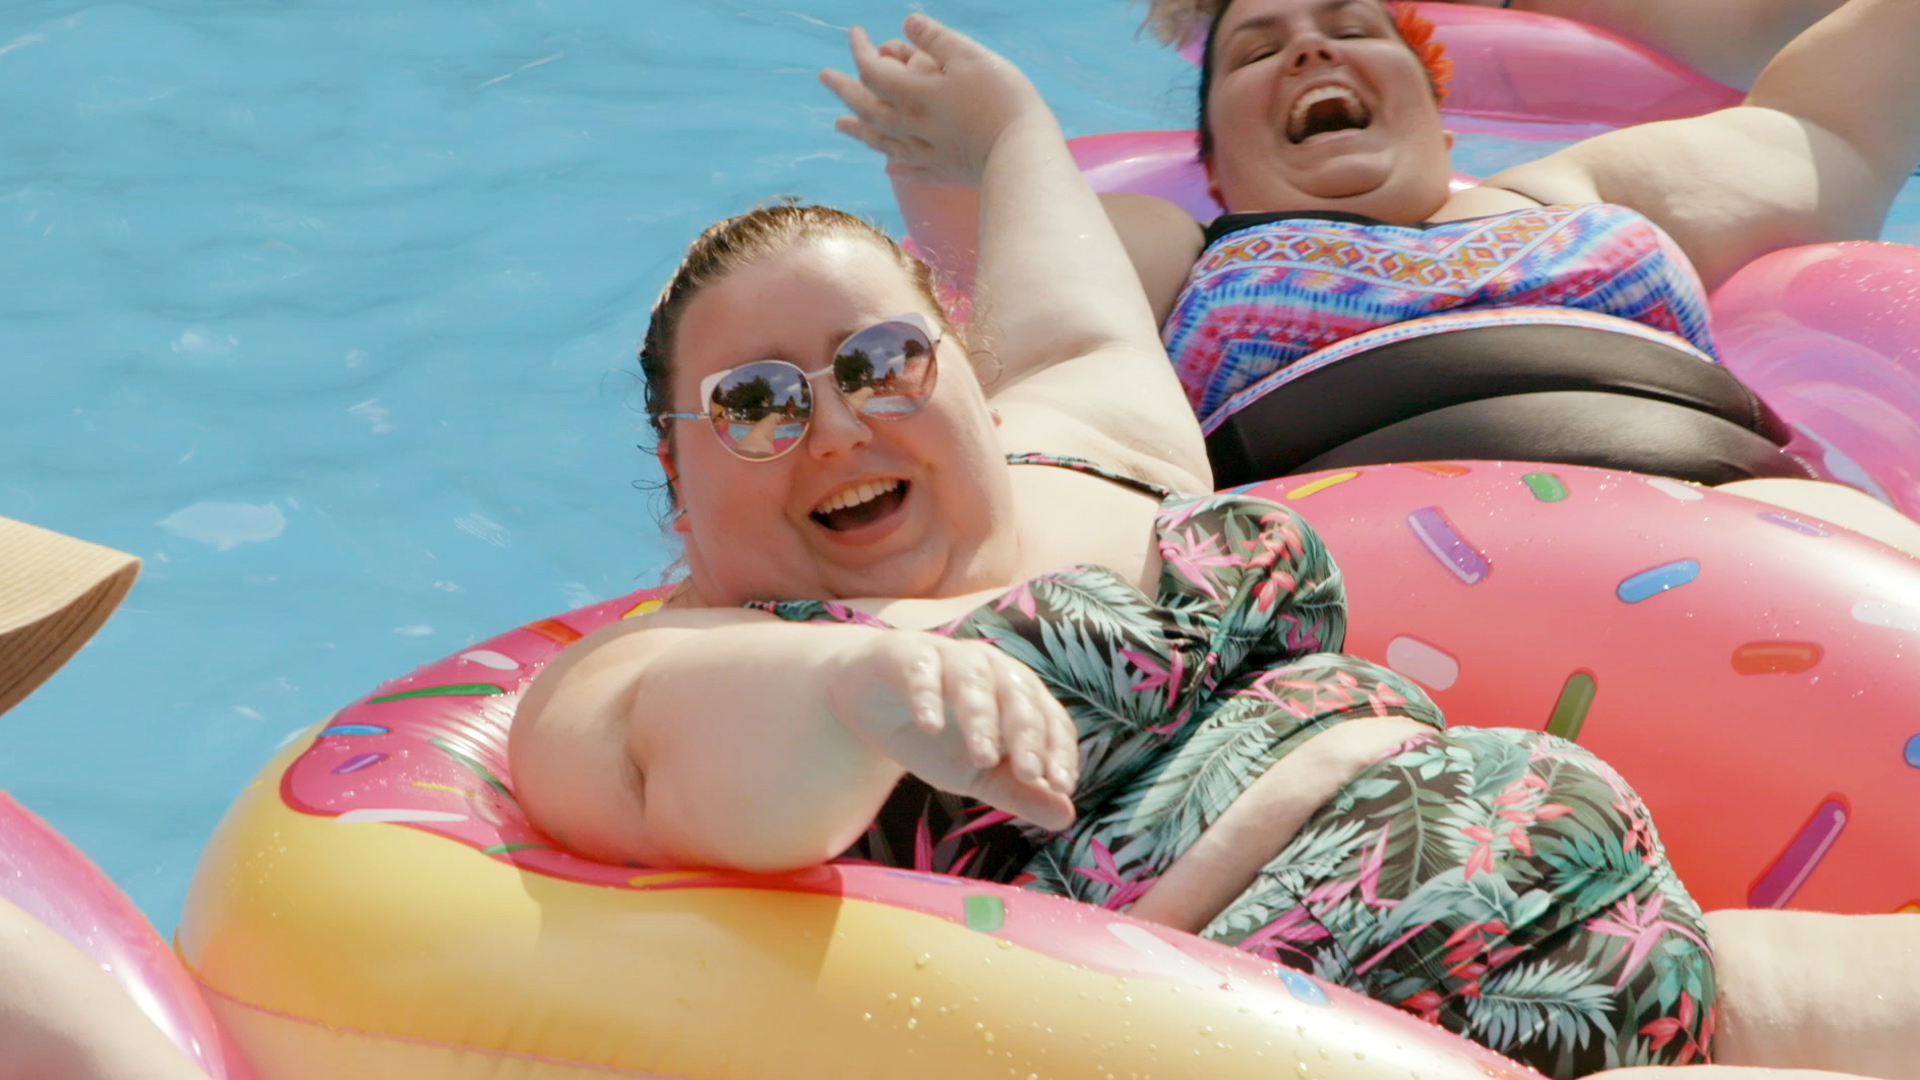 Fat Chick Pool - The Fat Camp Celebrating Body Positivity